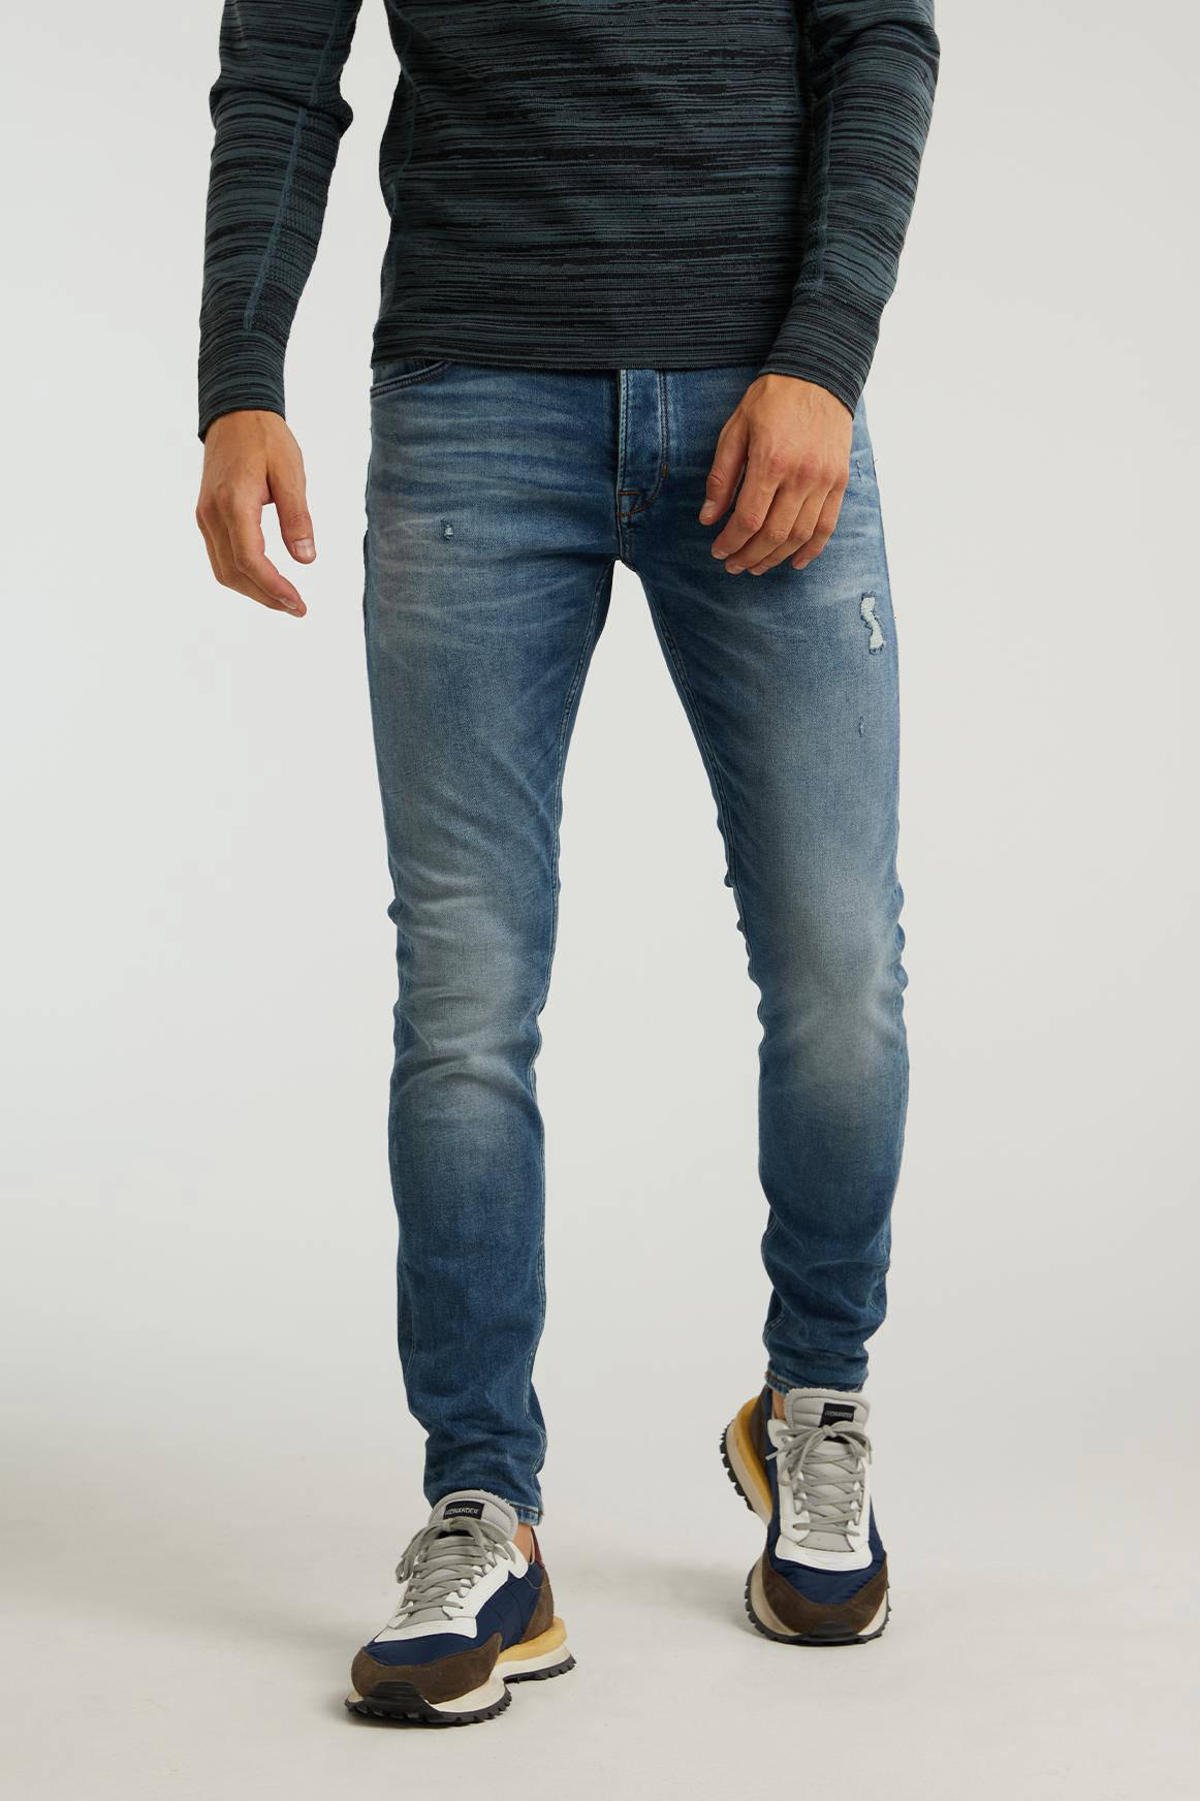 Conserveermiddel Poëzie Volharding CHASIN' slim fit jeans Ego Noble light blue | wehkamp